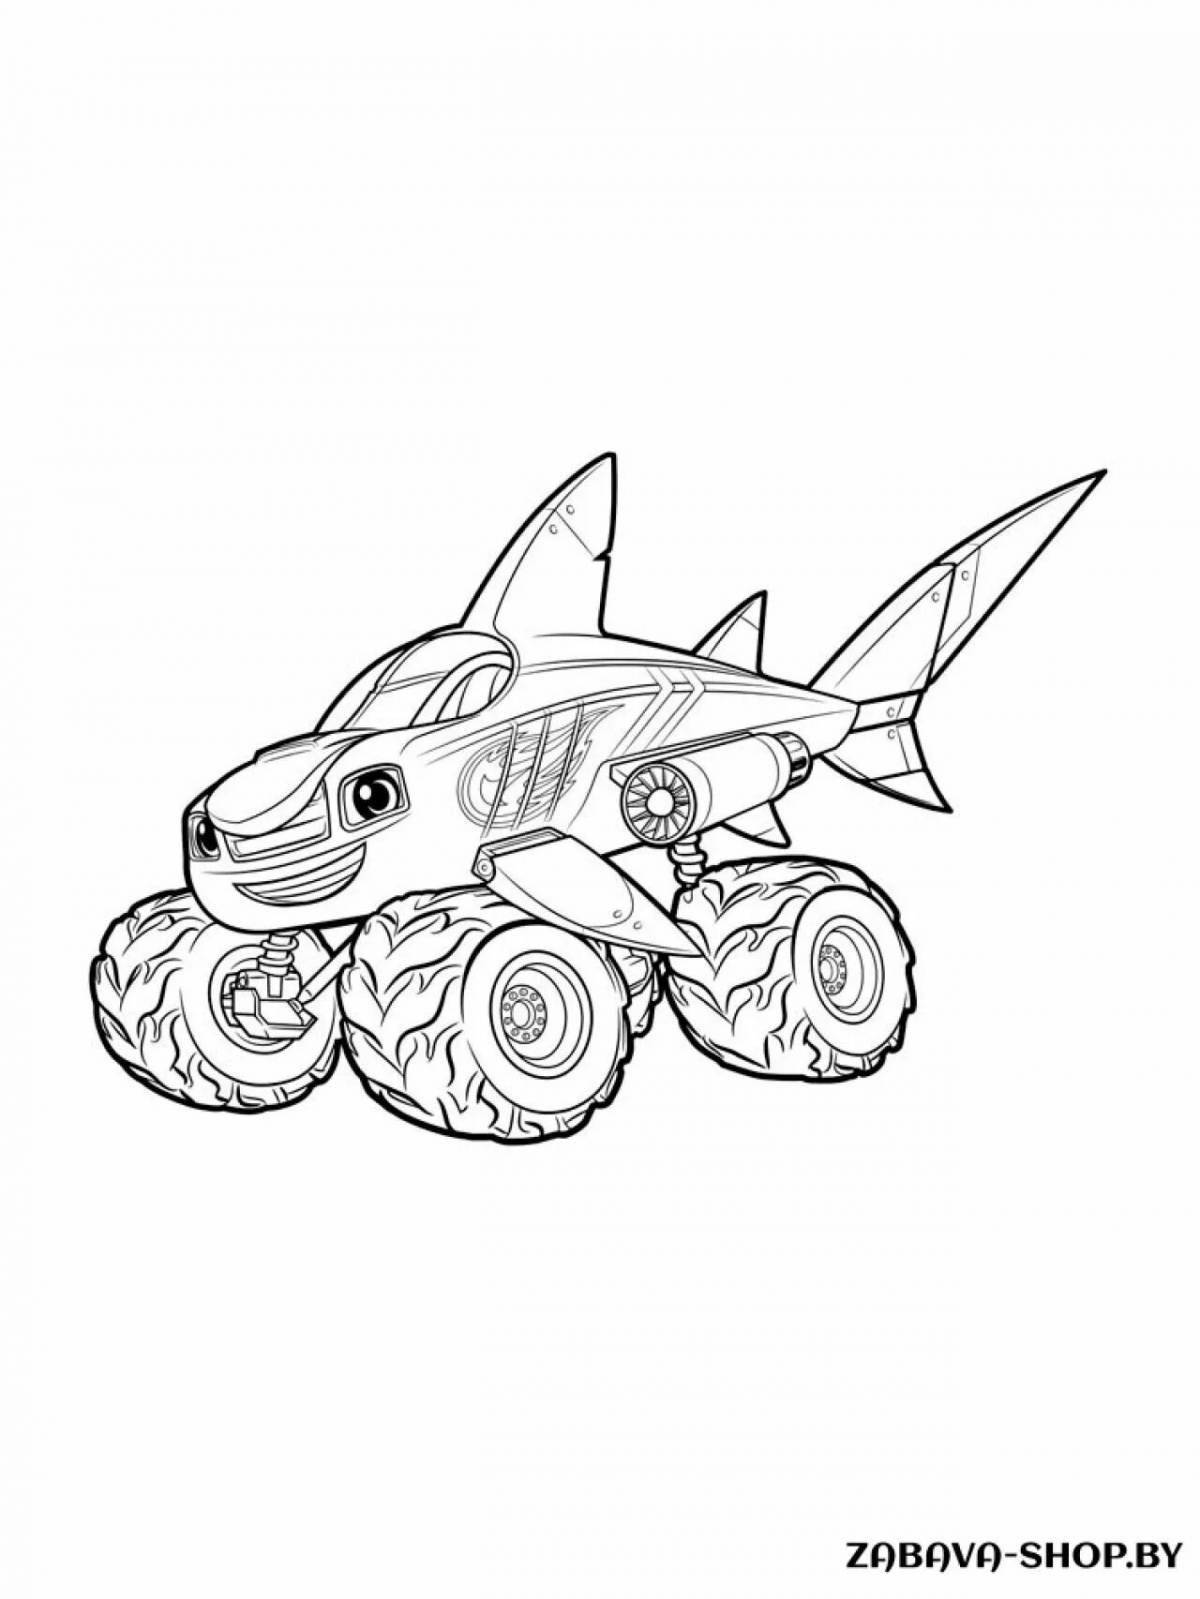 Robot shark playful coloring page